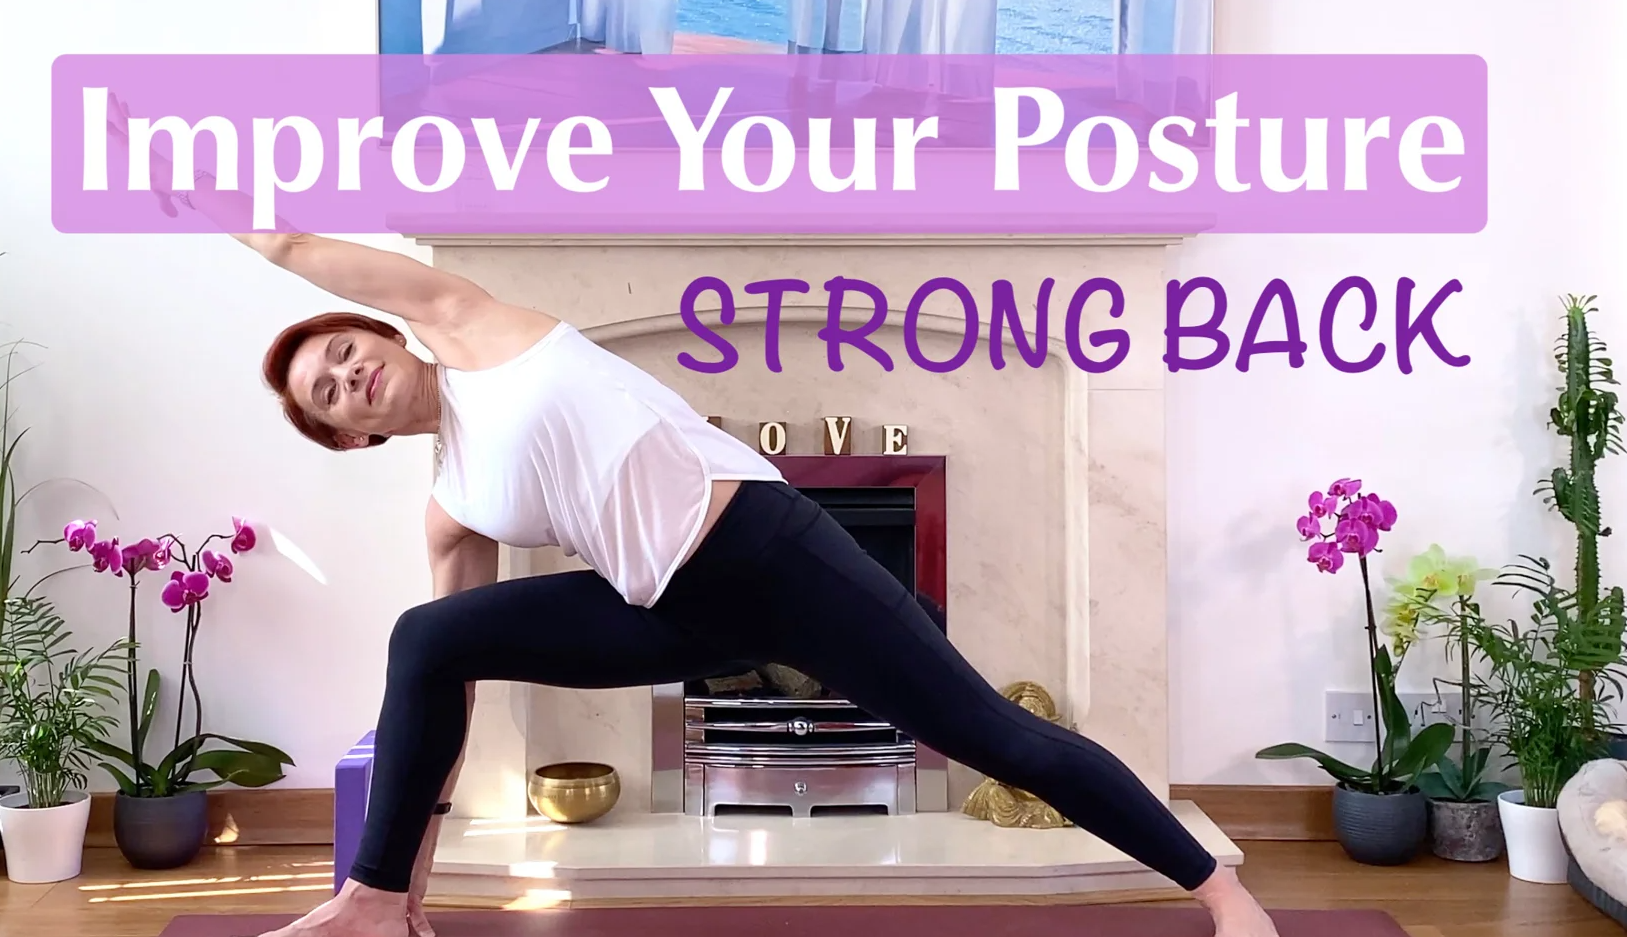 Olga Oakenfold - Improve Your Posture - Strong Back